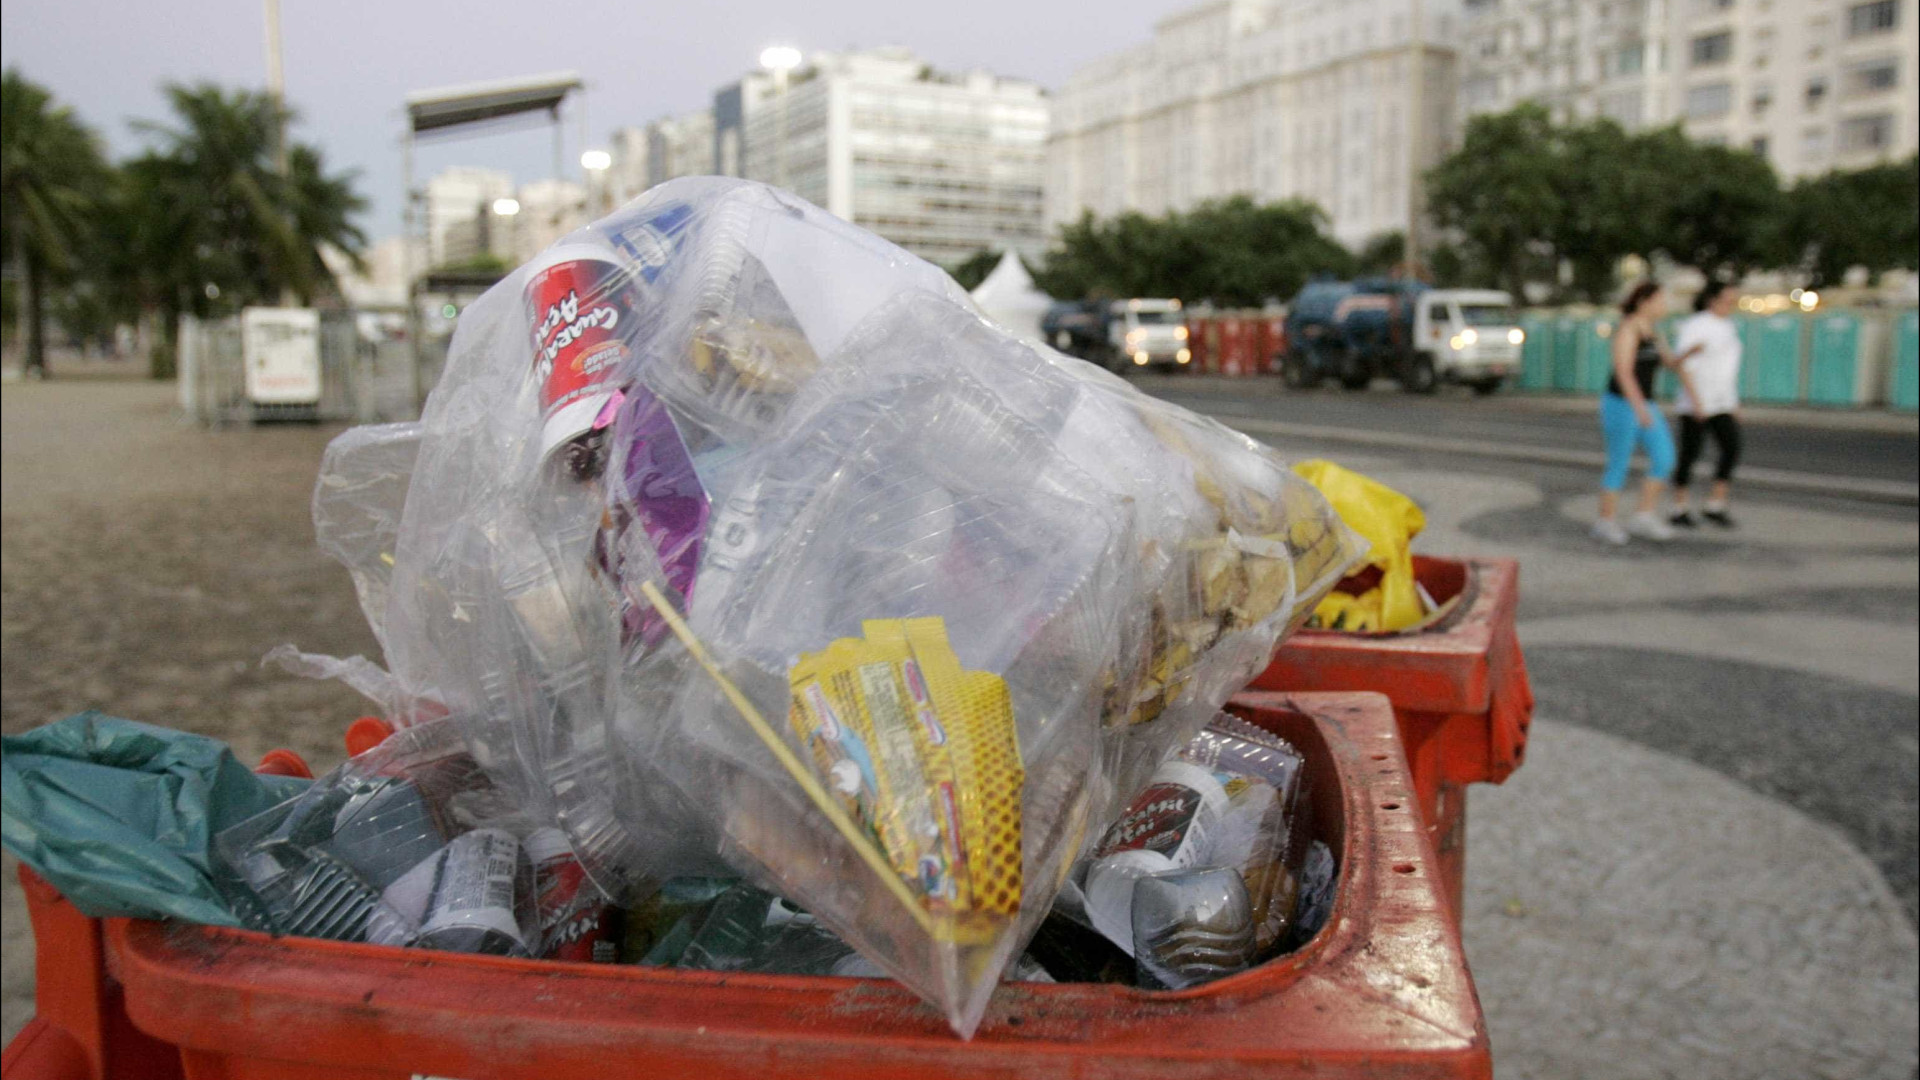 Réveillon do Rio gera recorde com 969 toneladas de lixo